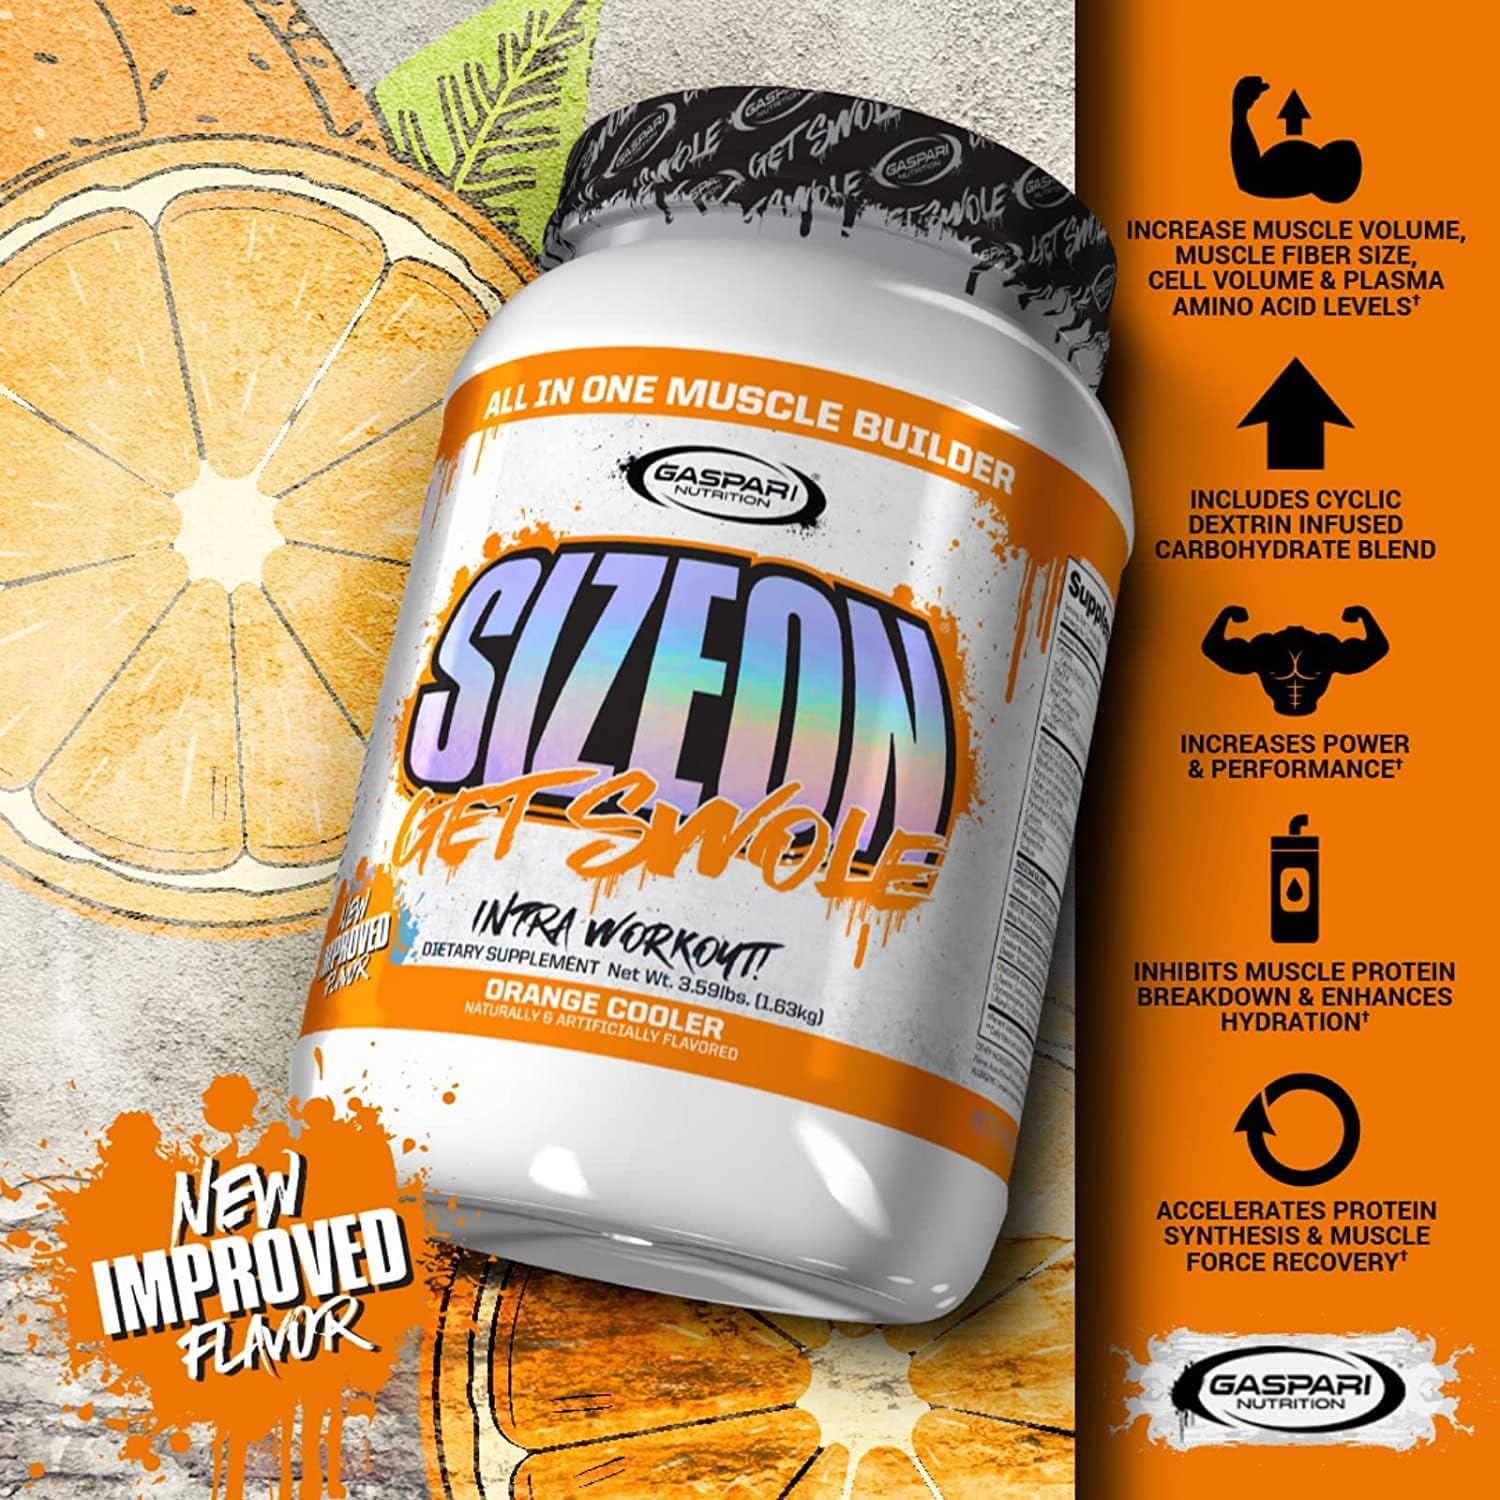 Gaspari Nutrition SizeOn, The Ultimate Hybrid Intra-Workout Amino Acid